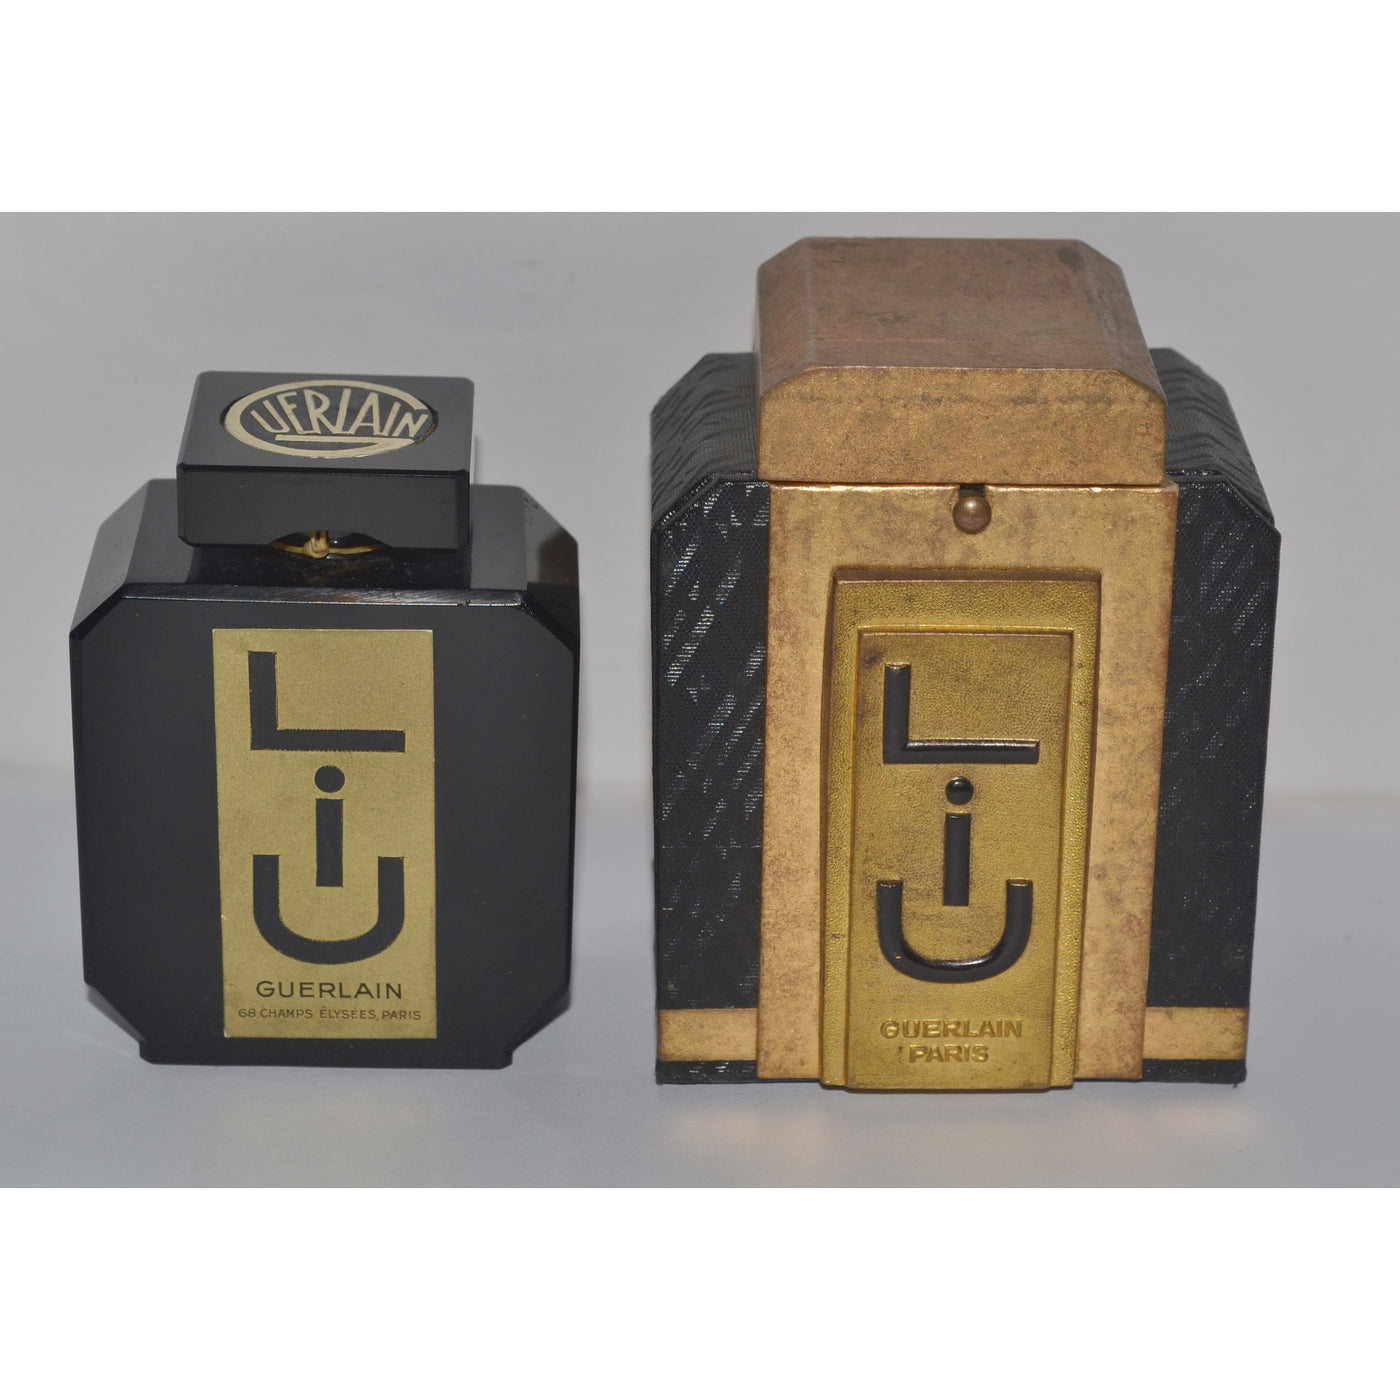 Vintage Guerlain LIU Parfum